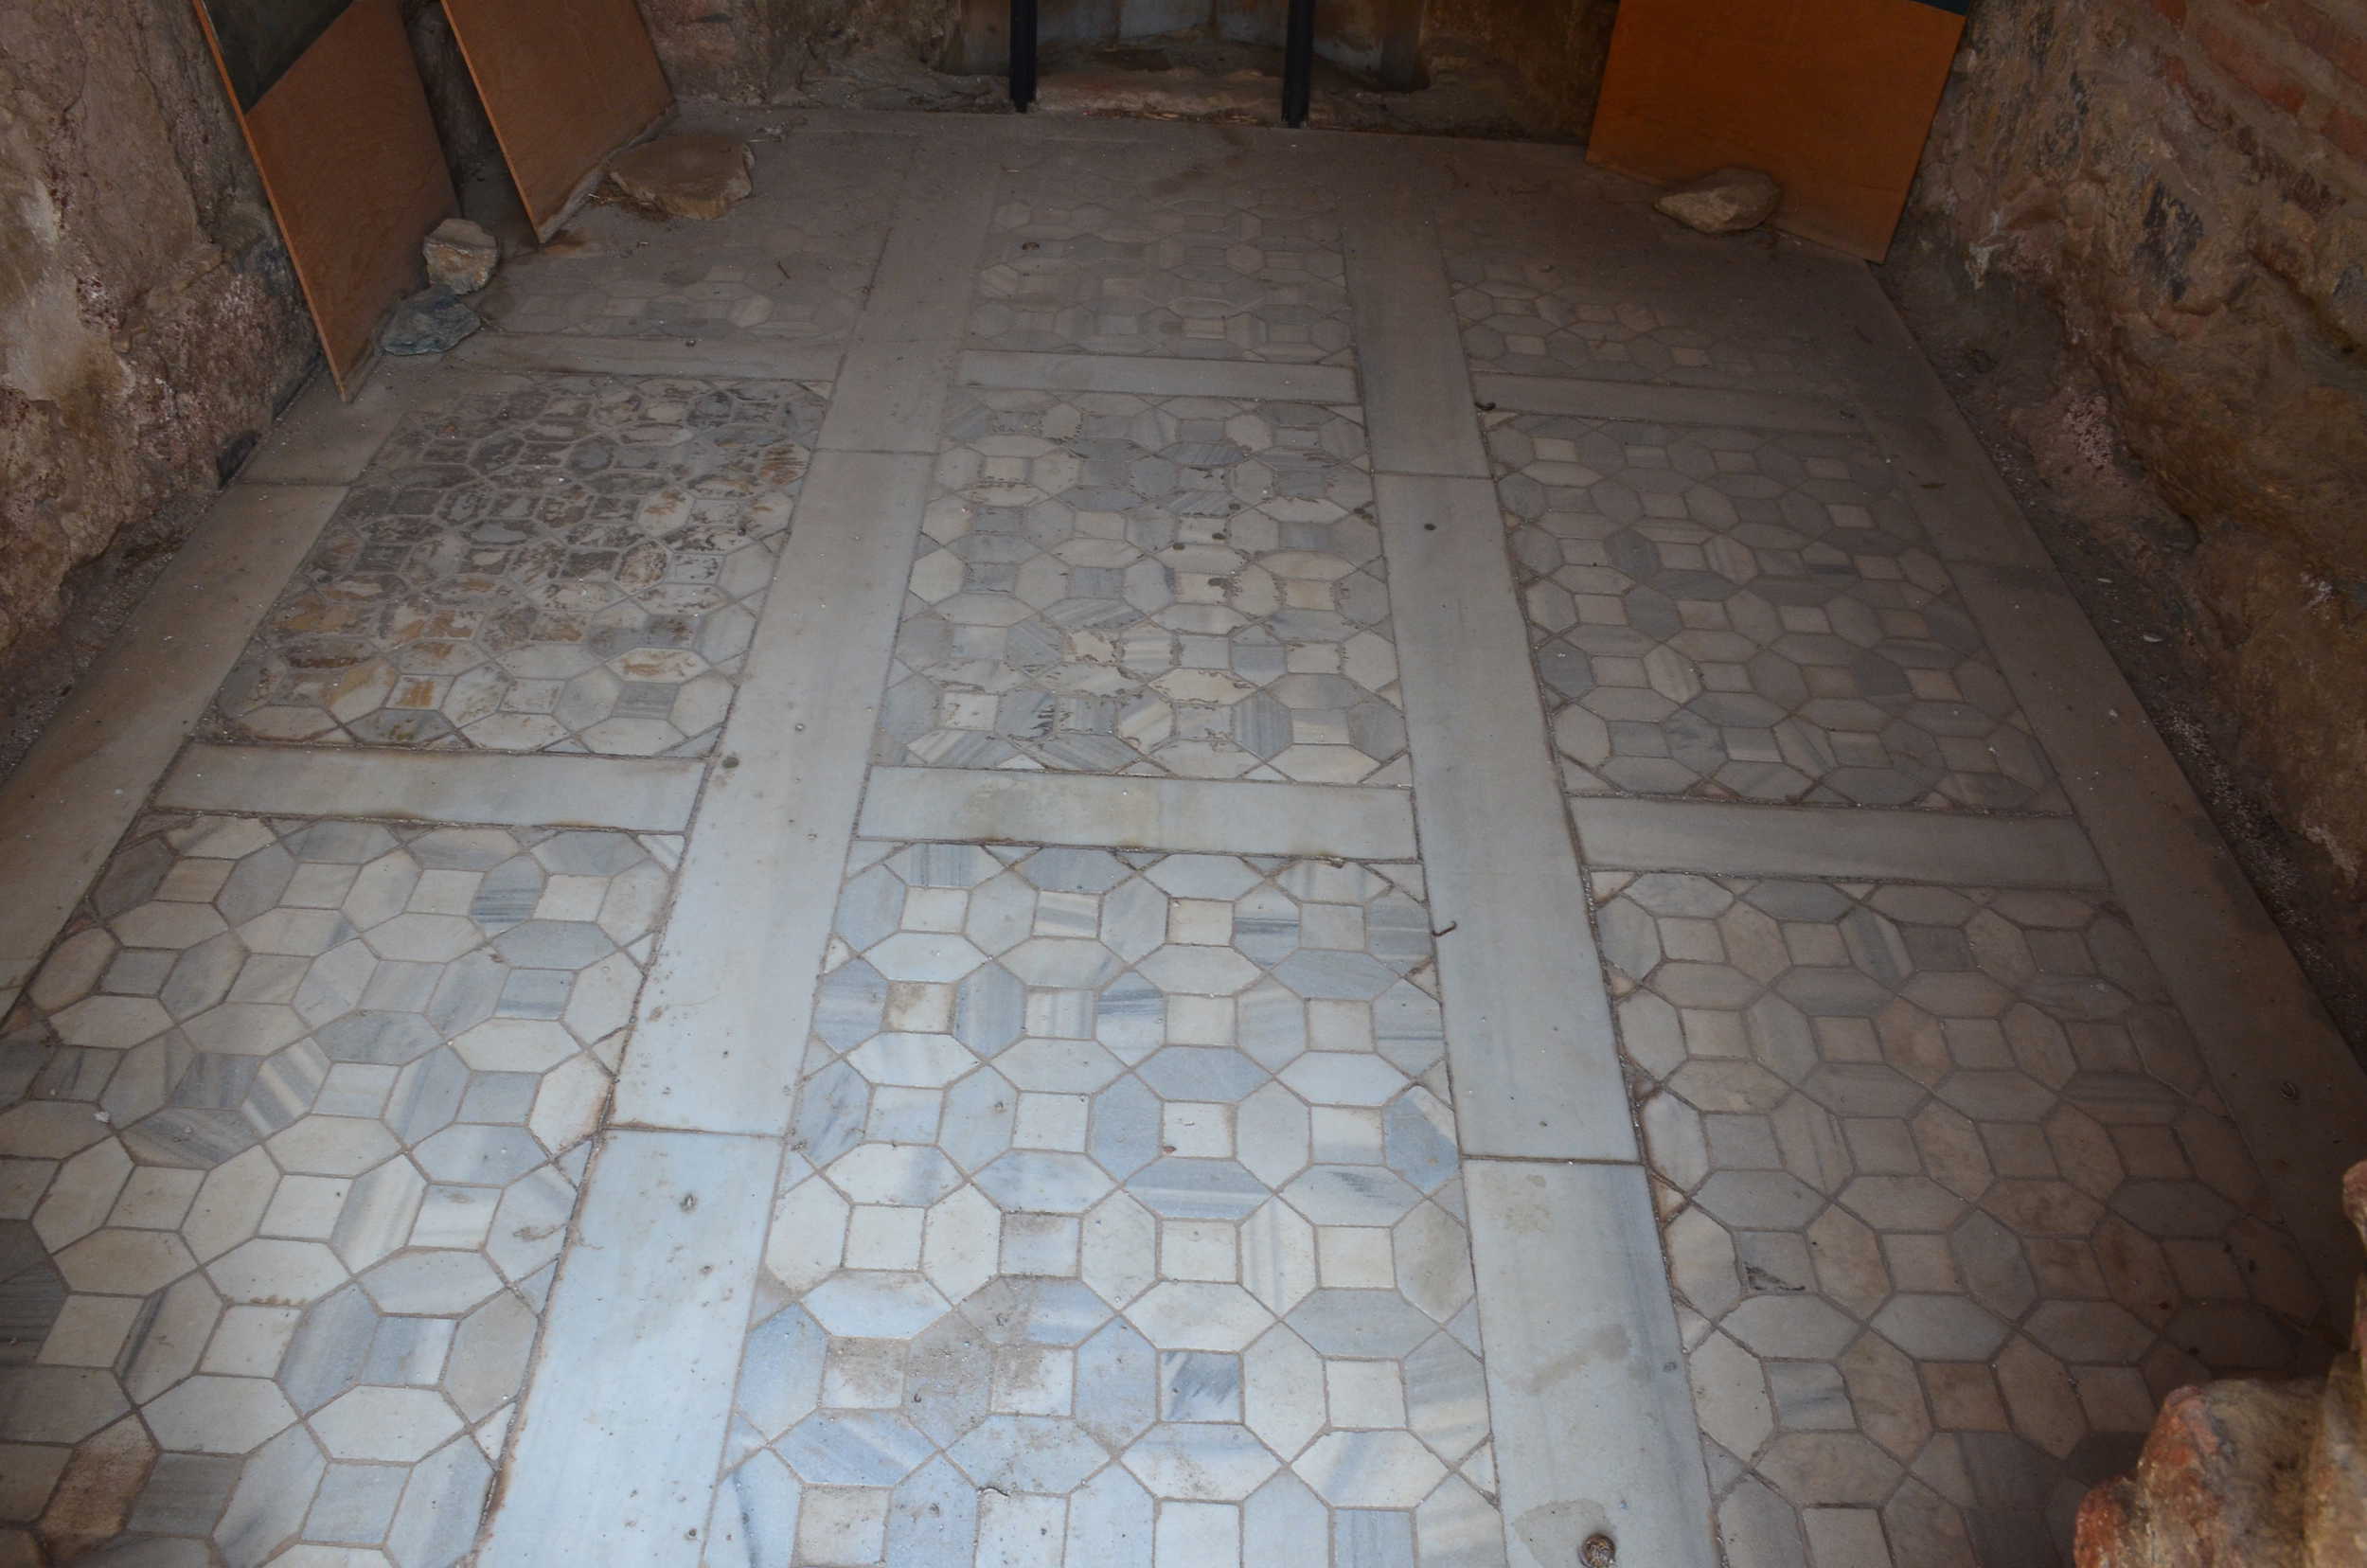 Opus sectile floor of the chapel at the Basilica of Saint John in Selçuk, Turkey